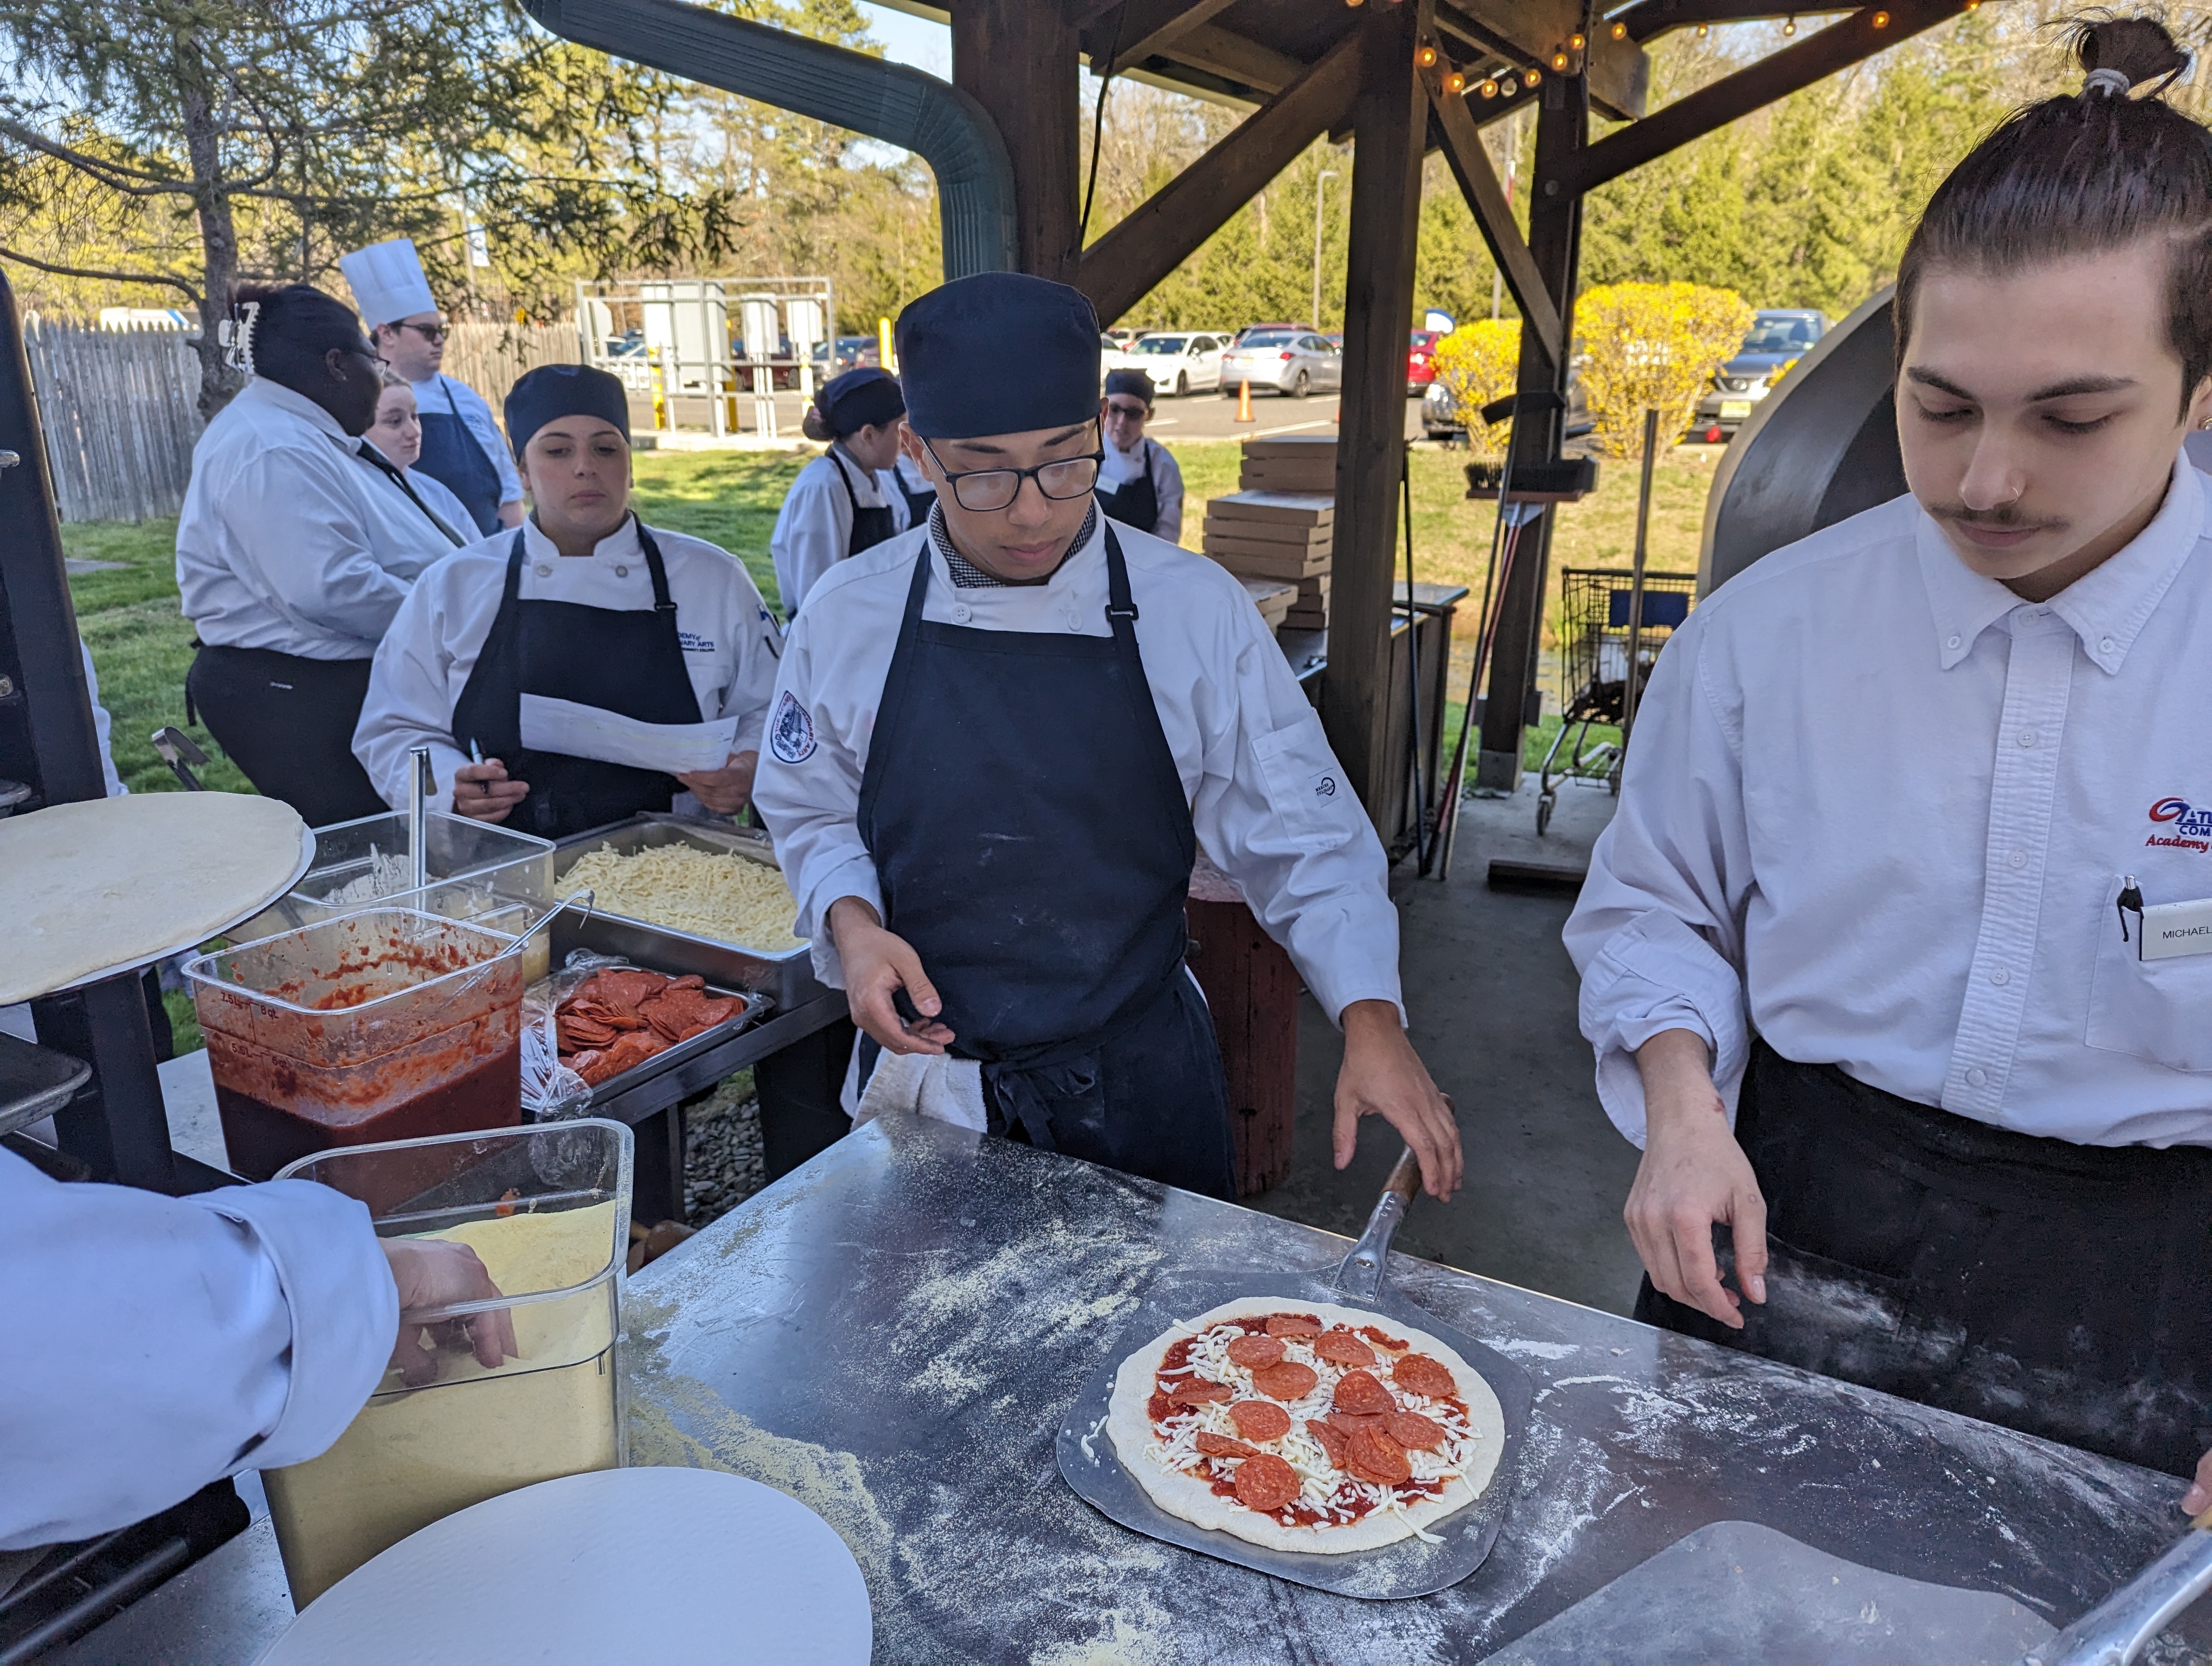 ACA students prepare fresh pizzas